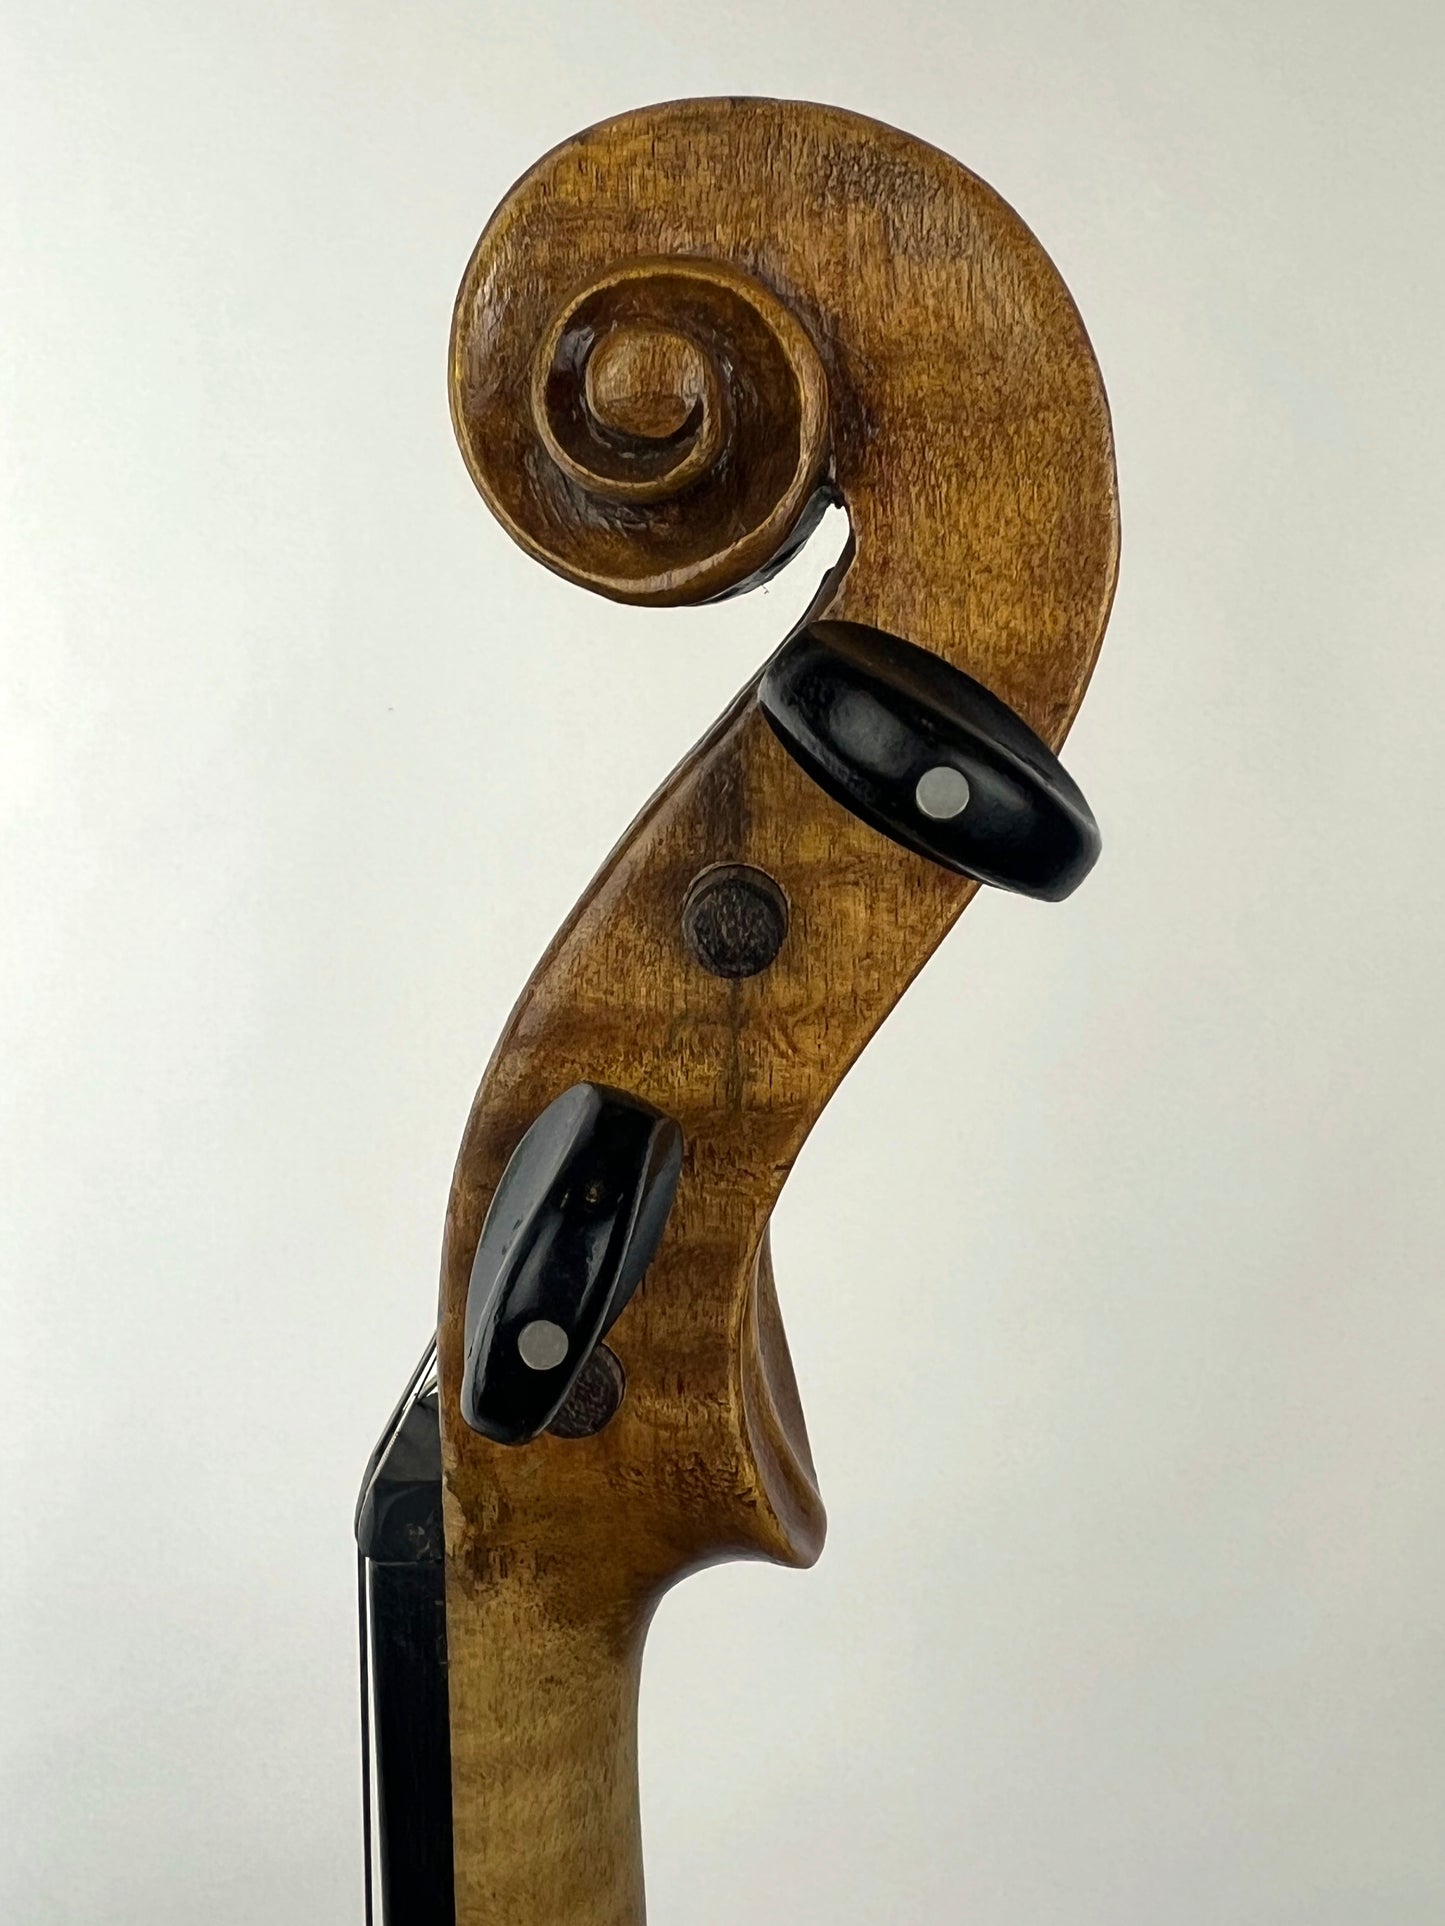 SOLD - Stainer in Absam prope Oeninontum Violin - Used